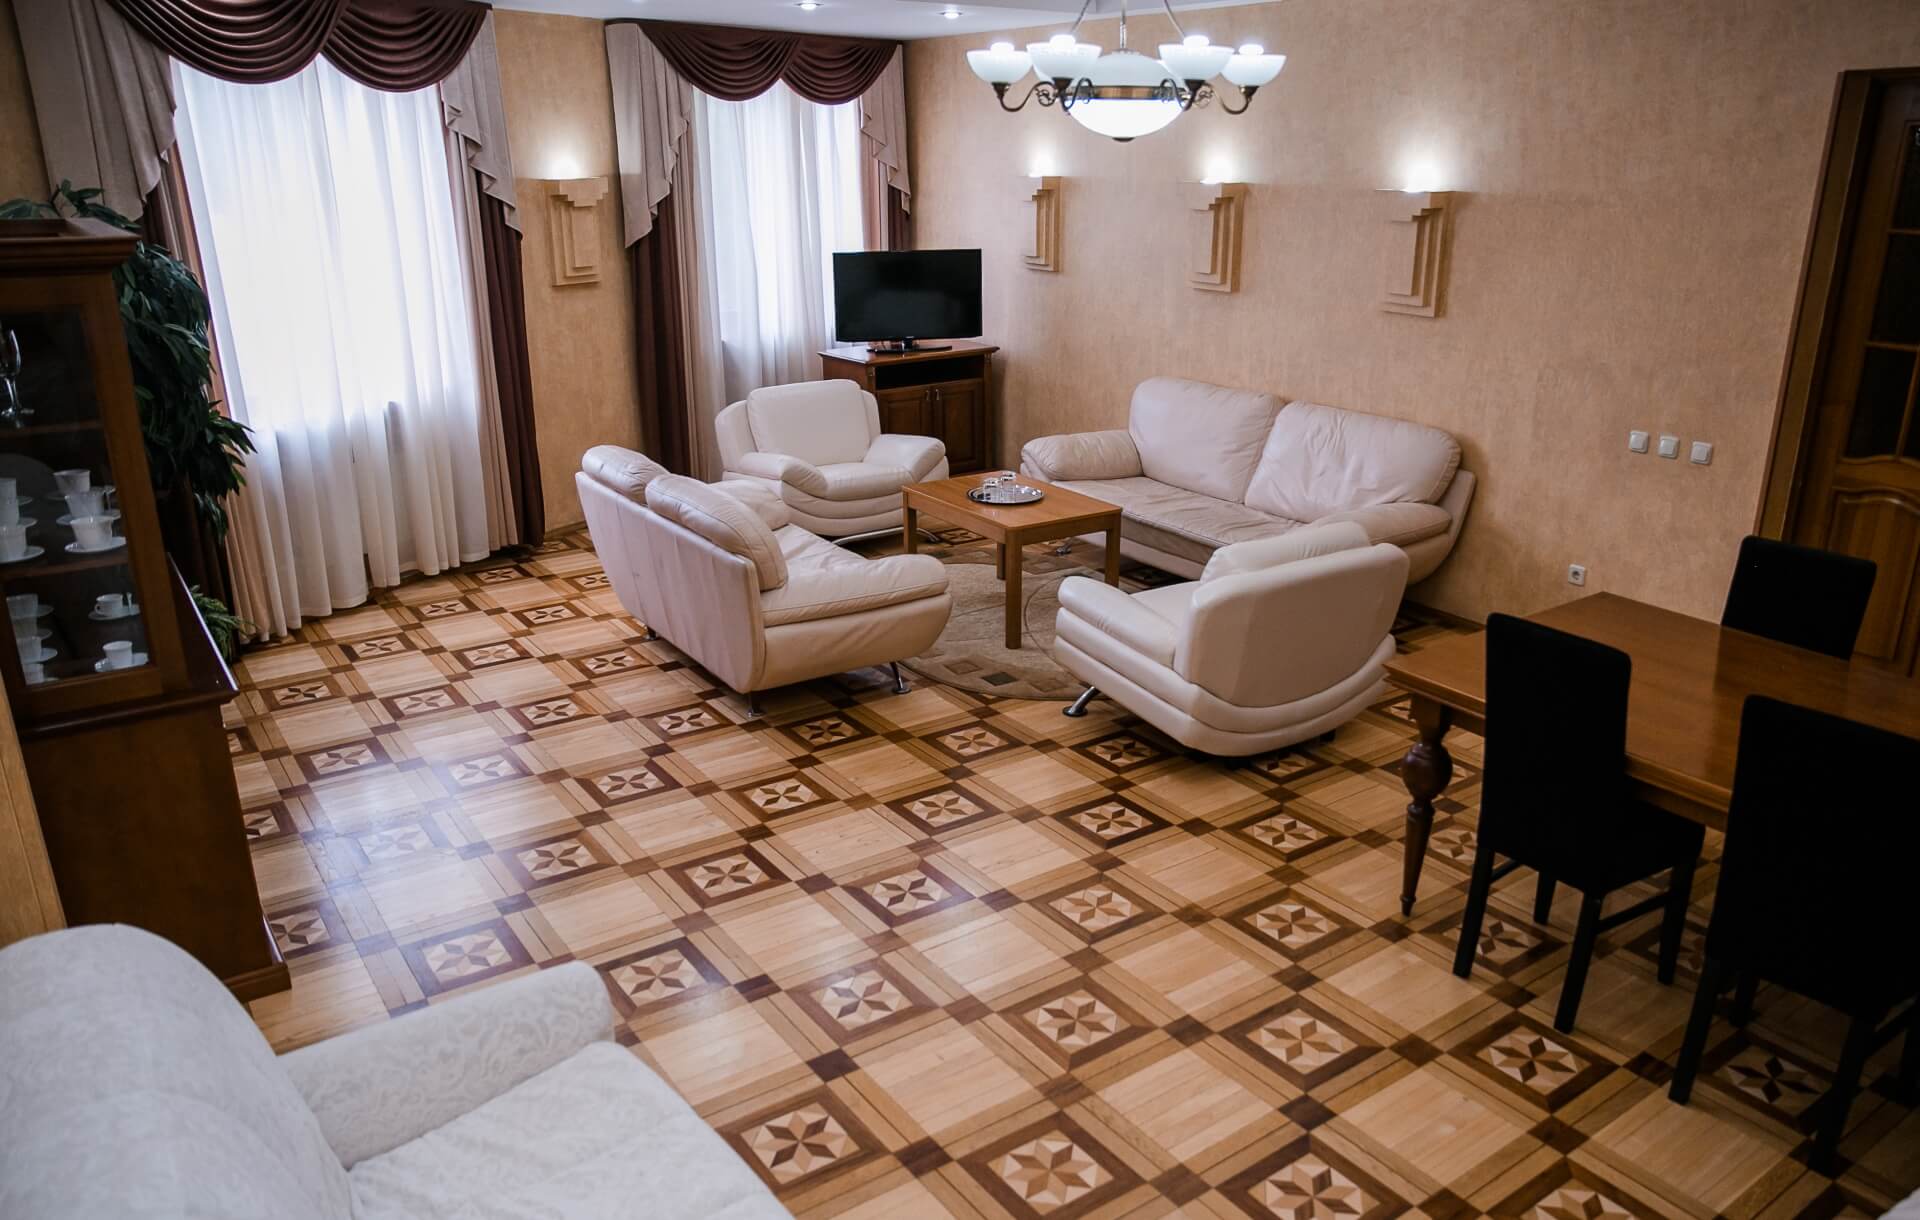 Отель белогорье белгород